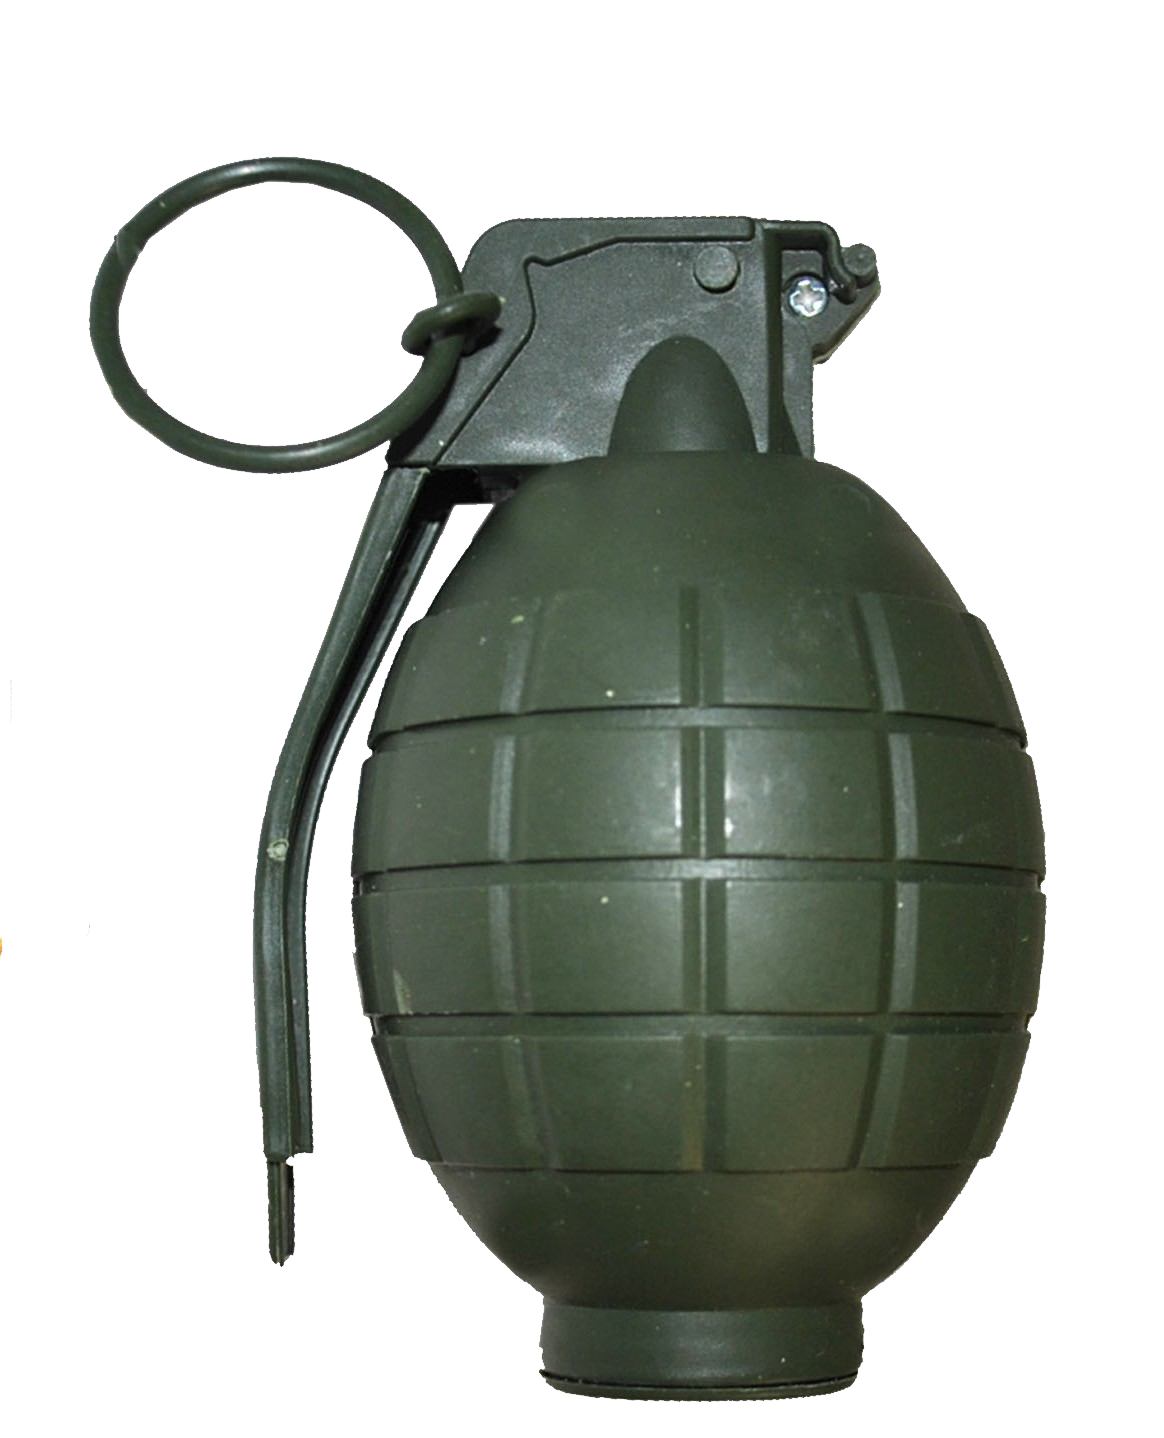 Hand Grenade Png Image - Grenade, Transparent background PNG HD thumbnail